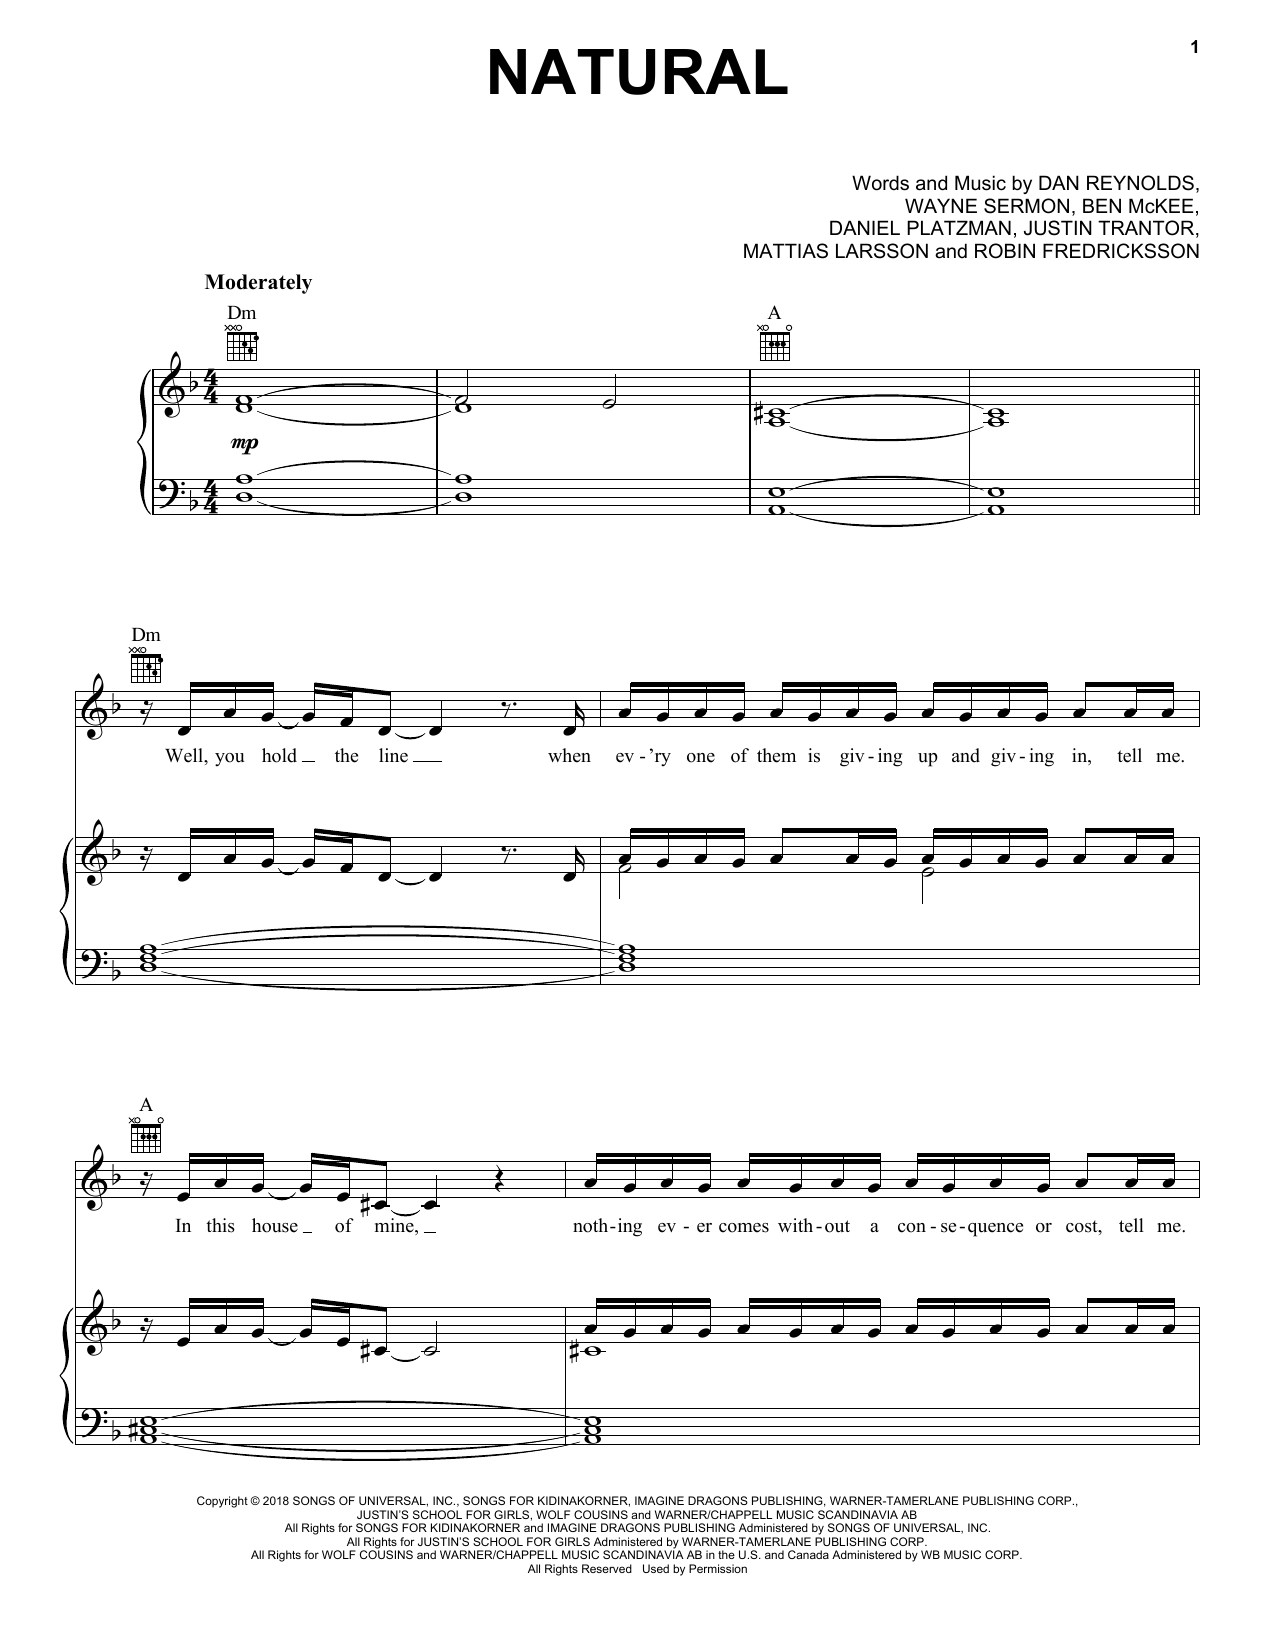 Imagine Dragons Natural Sheet Music Notes & Chords for Ukulele - Download or Print PDF